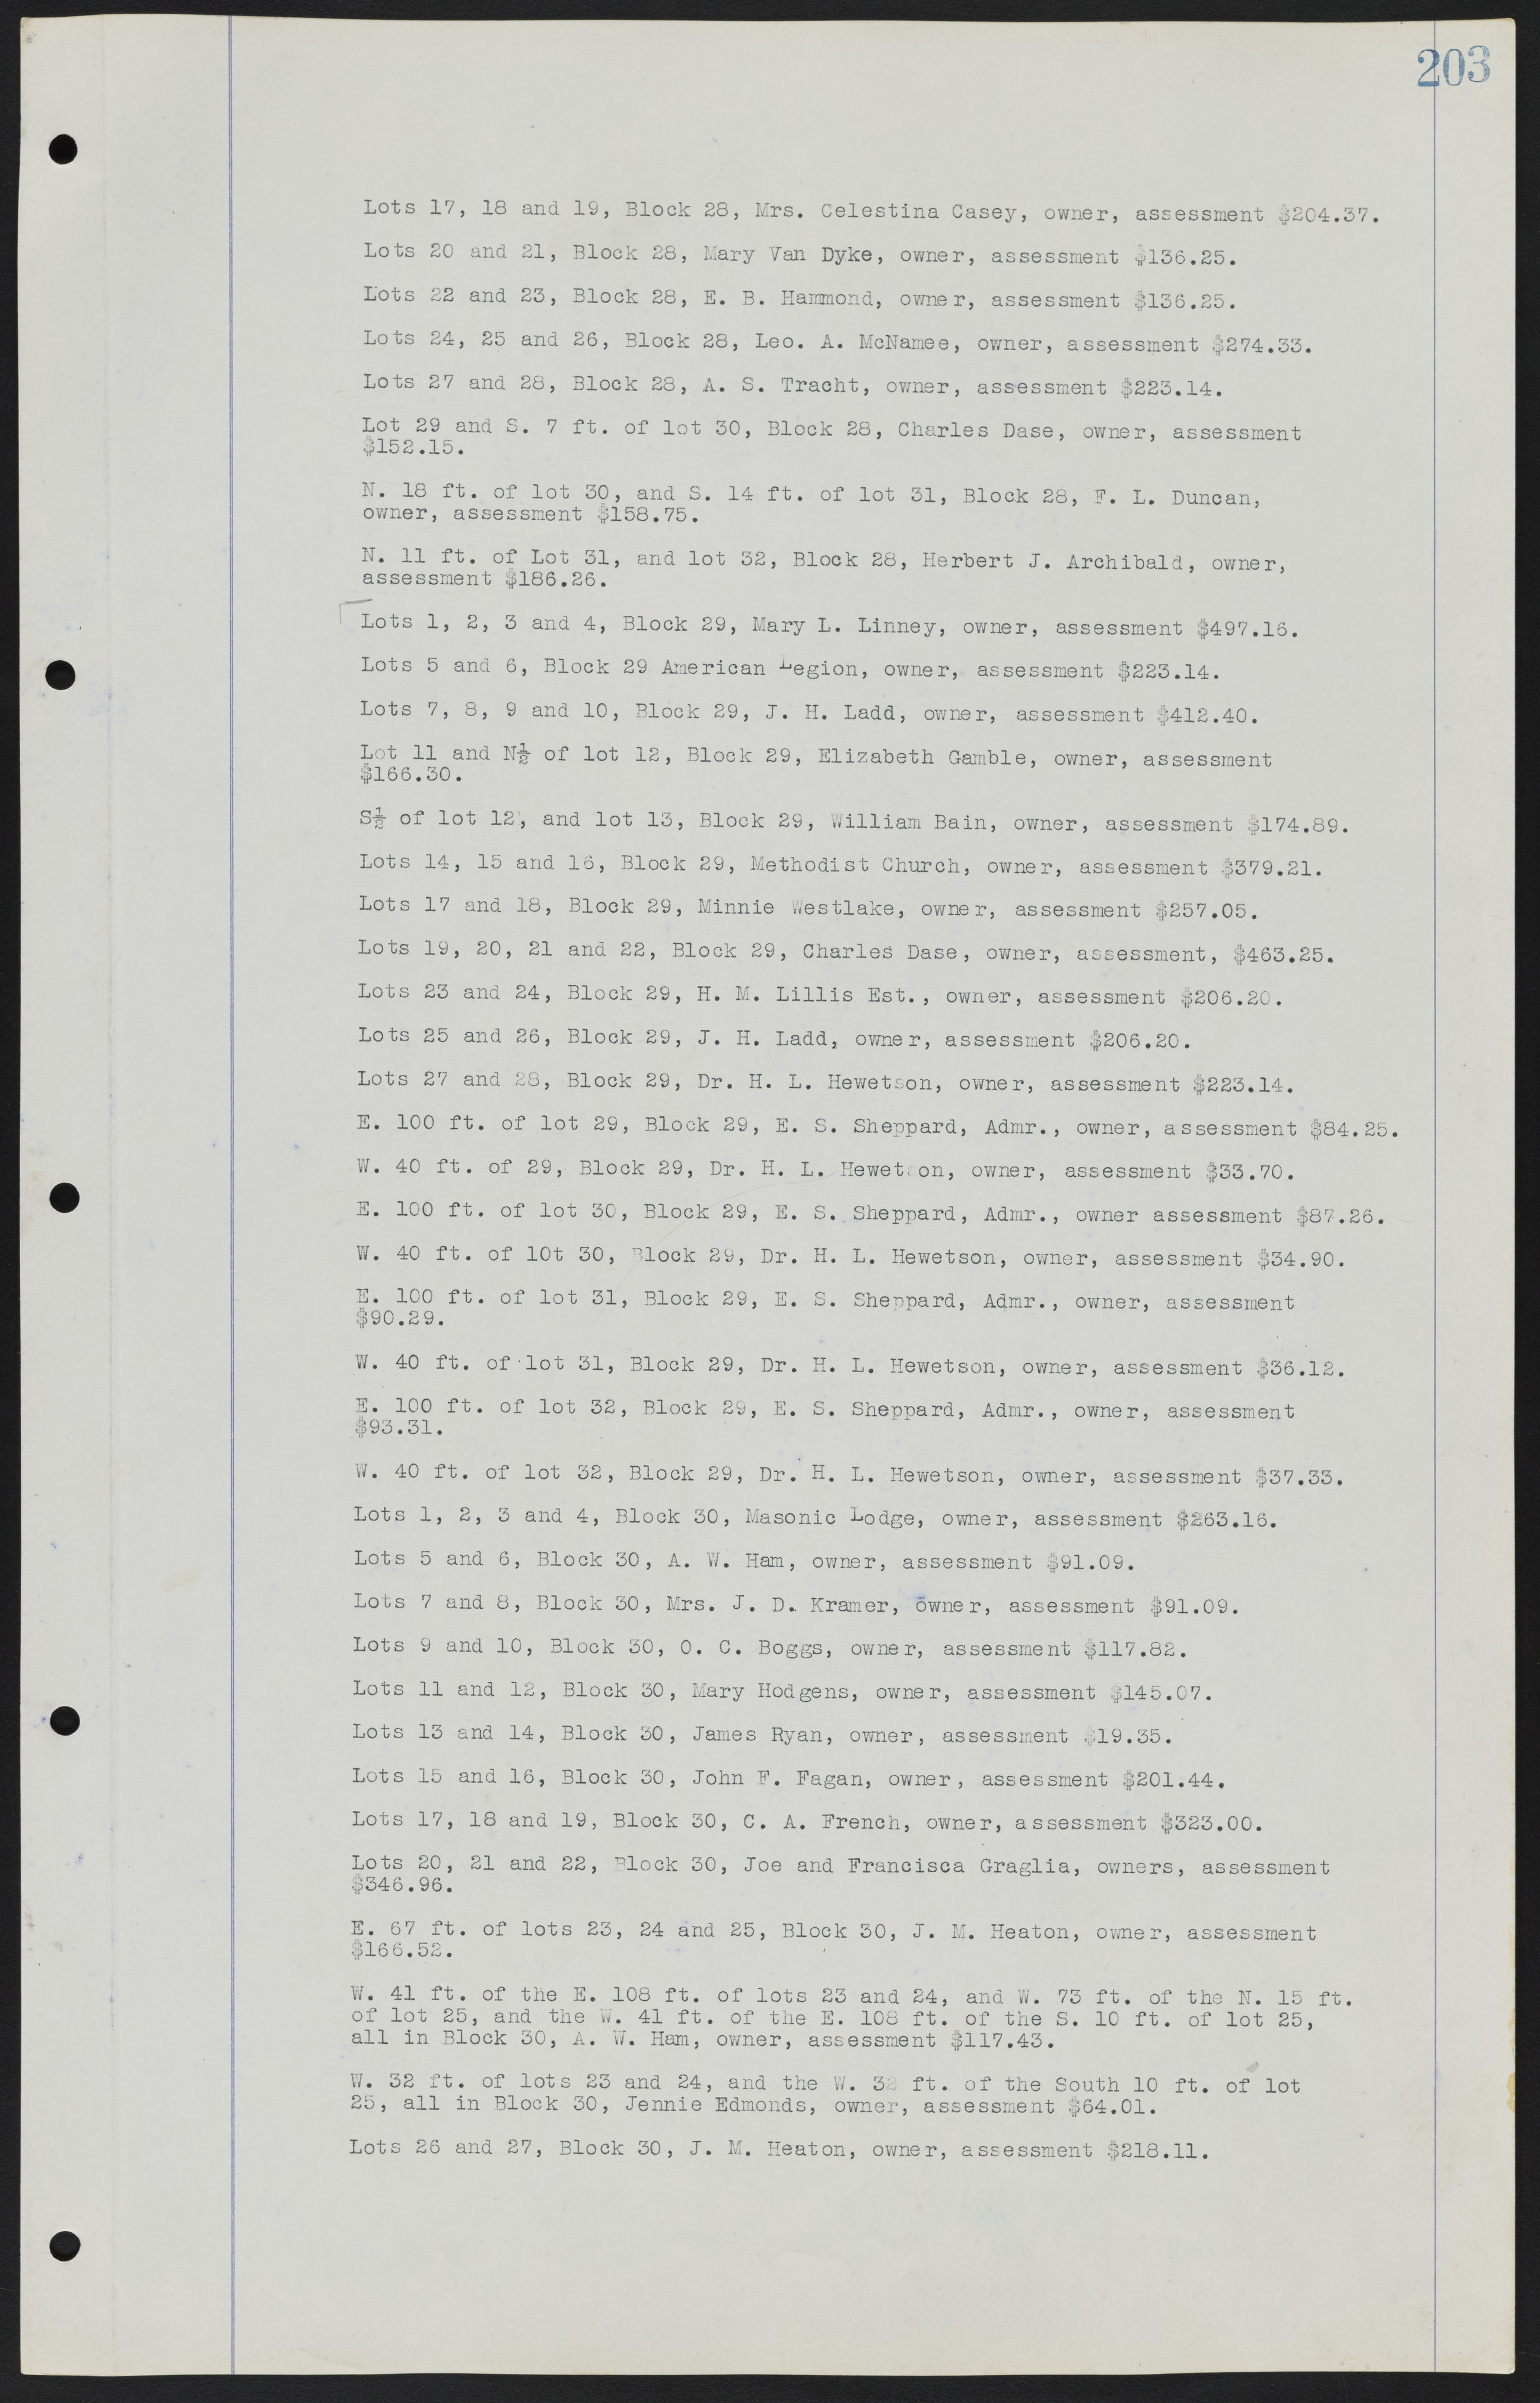 Las Vegas City Ordinances, July 18, 1911 to March 31, 1933, lvc000013-207